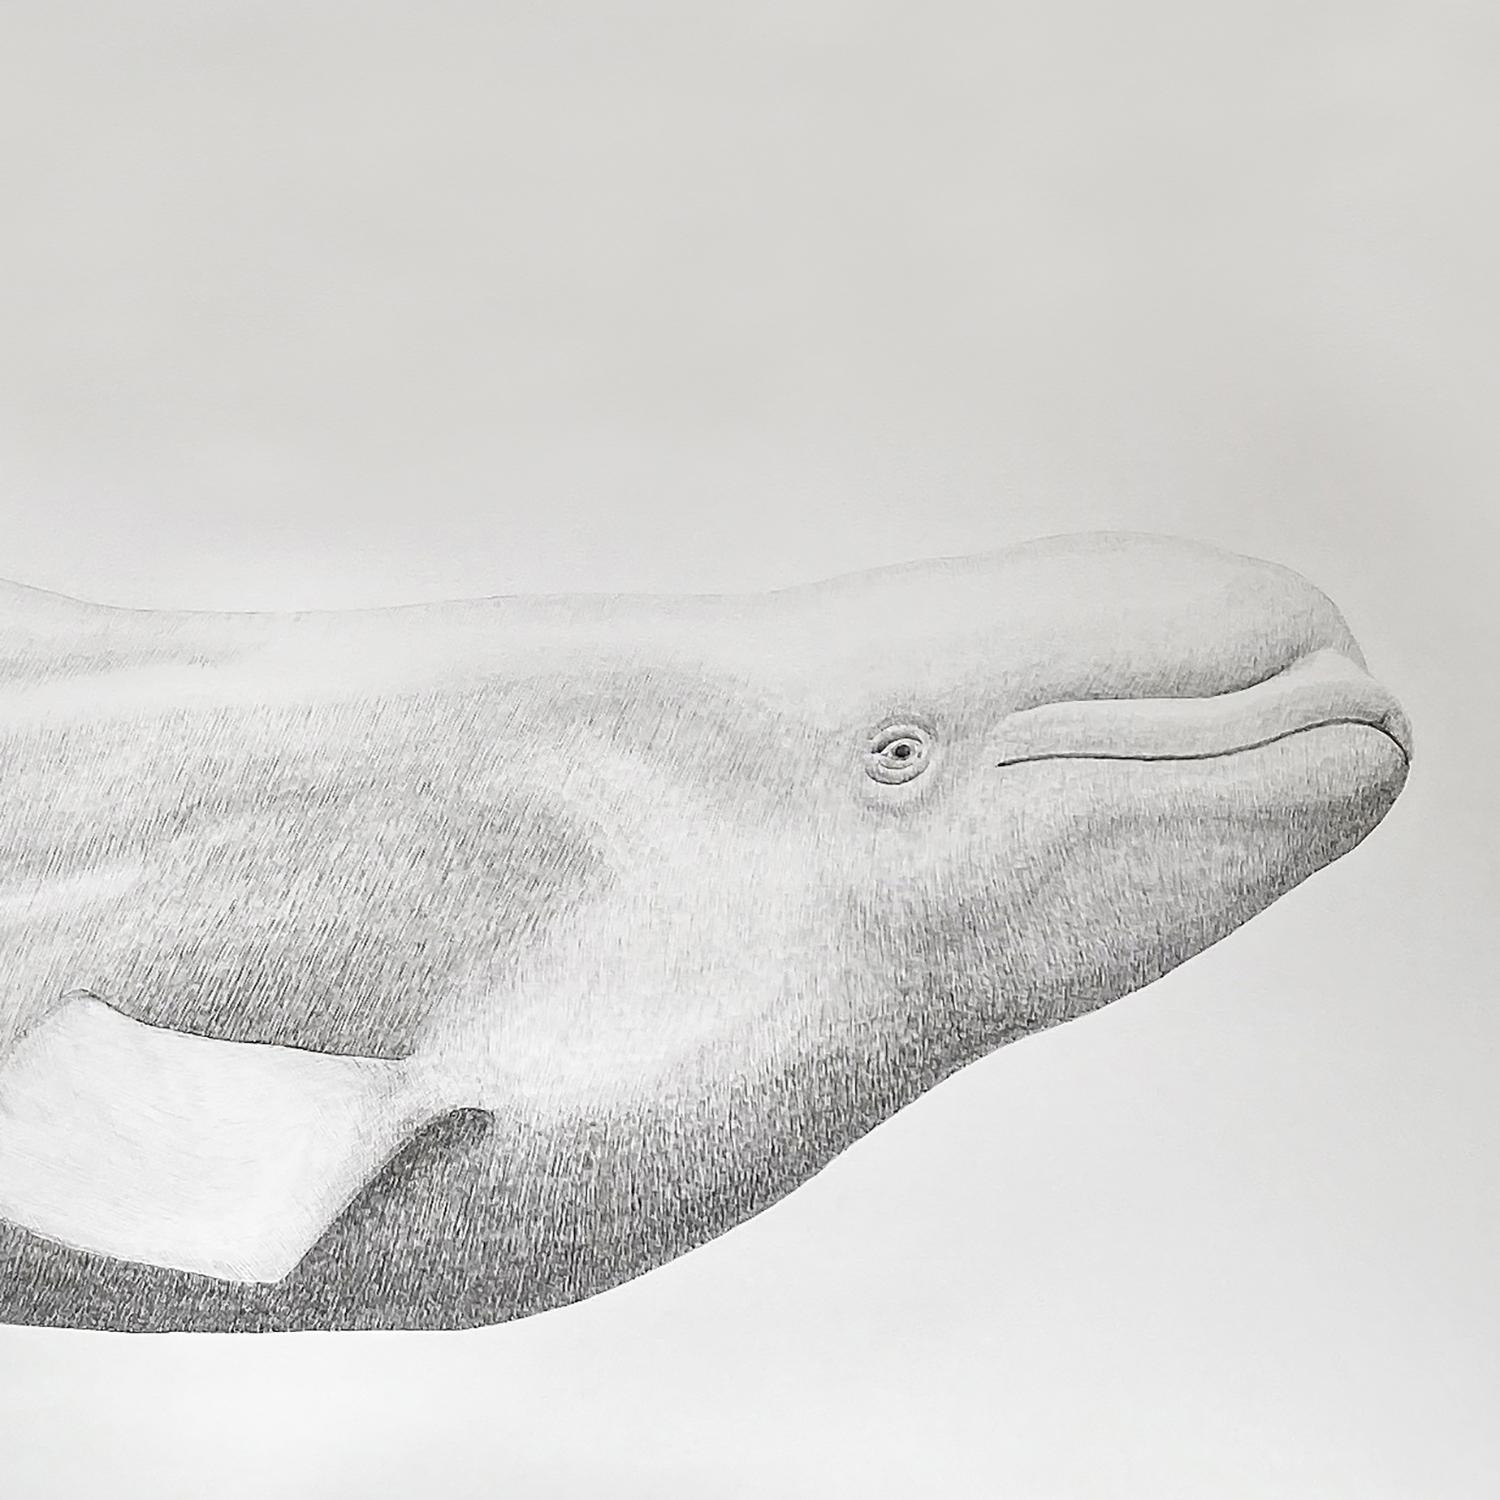 'Beluga' - large-scale animal drawing - Chuck Close - Rembrandt - Art by Hannah Hanlon